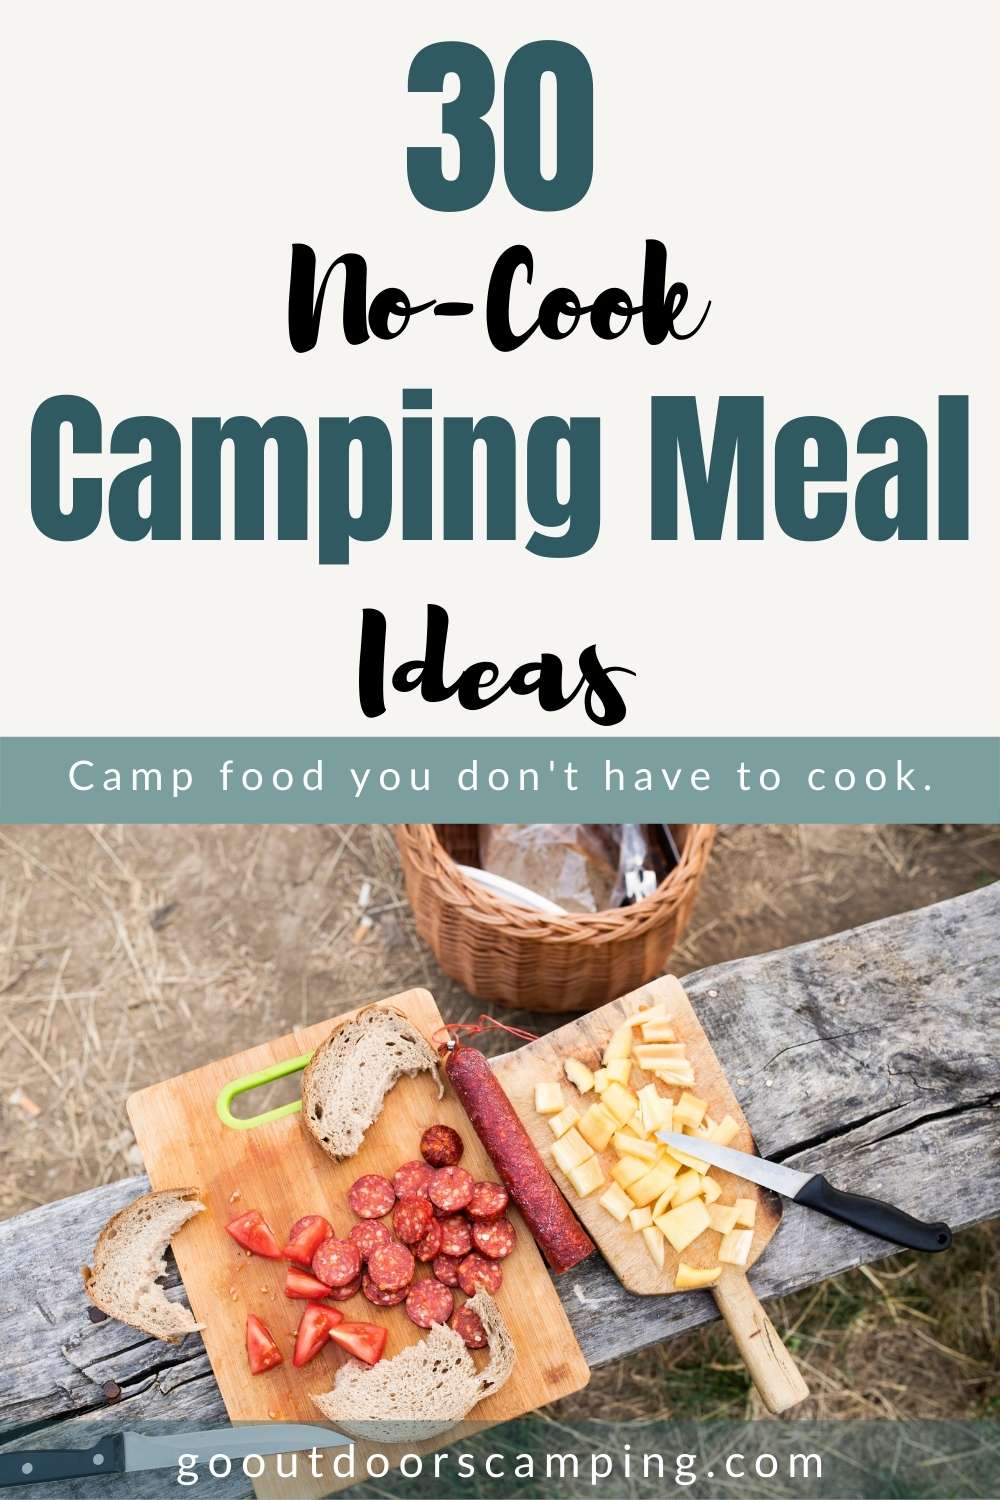 https://www.gooutdoorscamping.com/wp-content/uploads/2022/04/no-cook-camping-meals.jpg